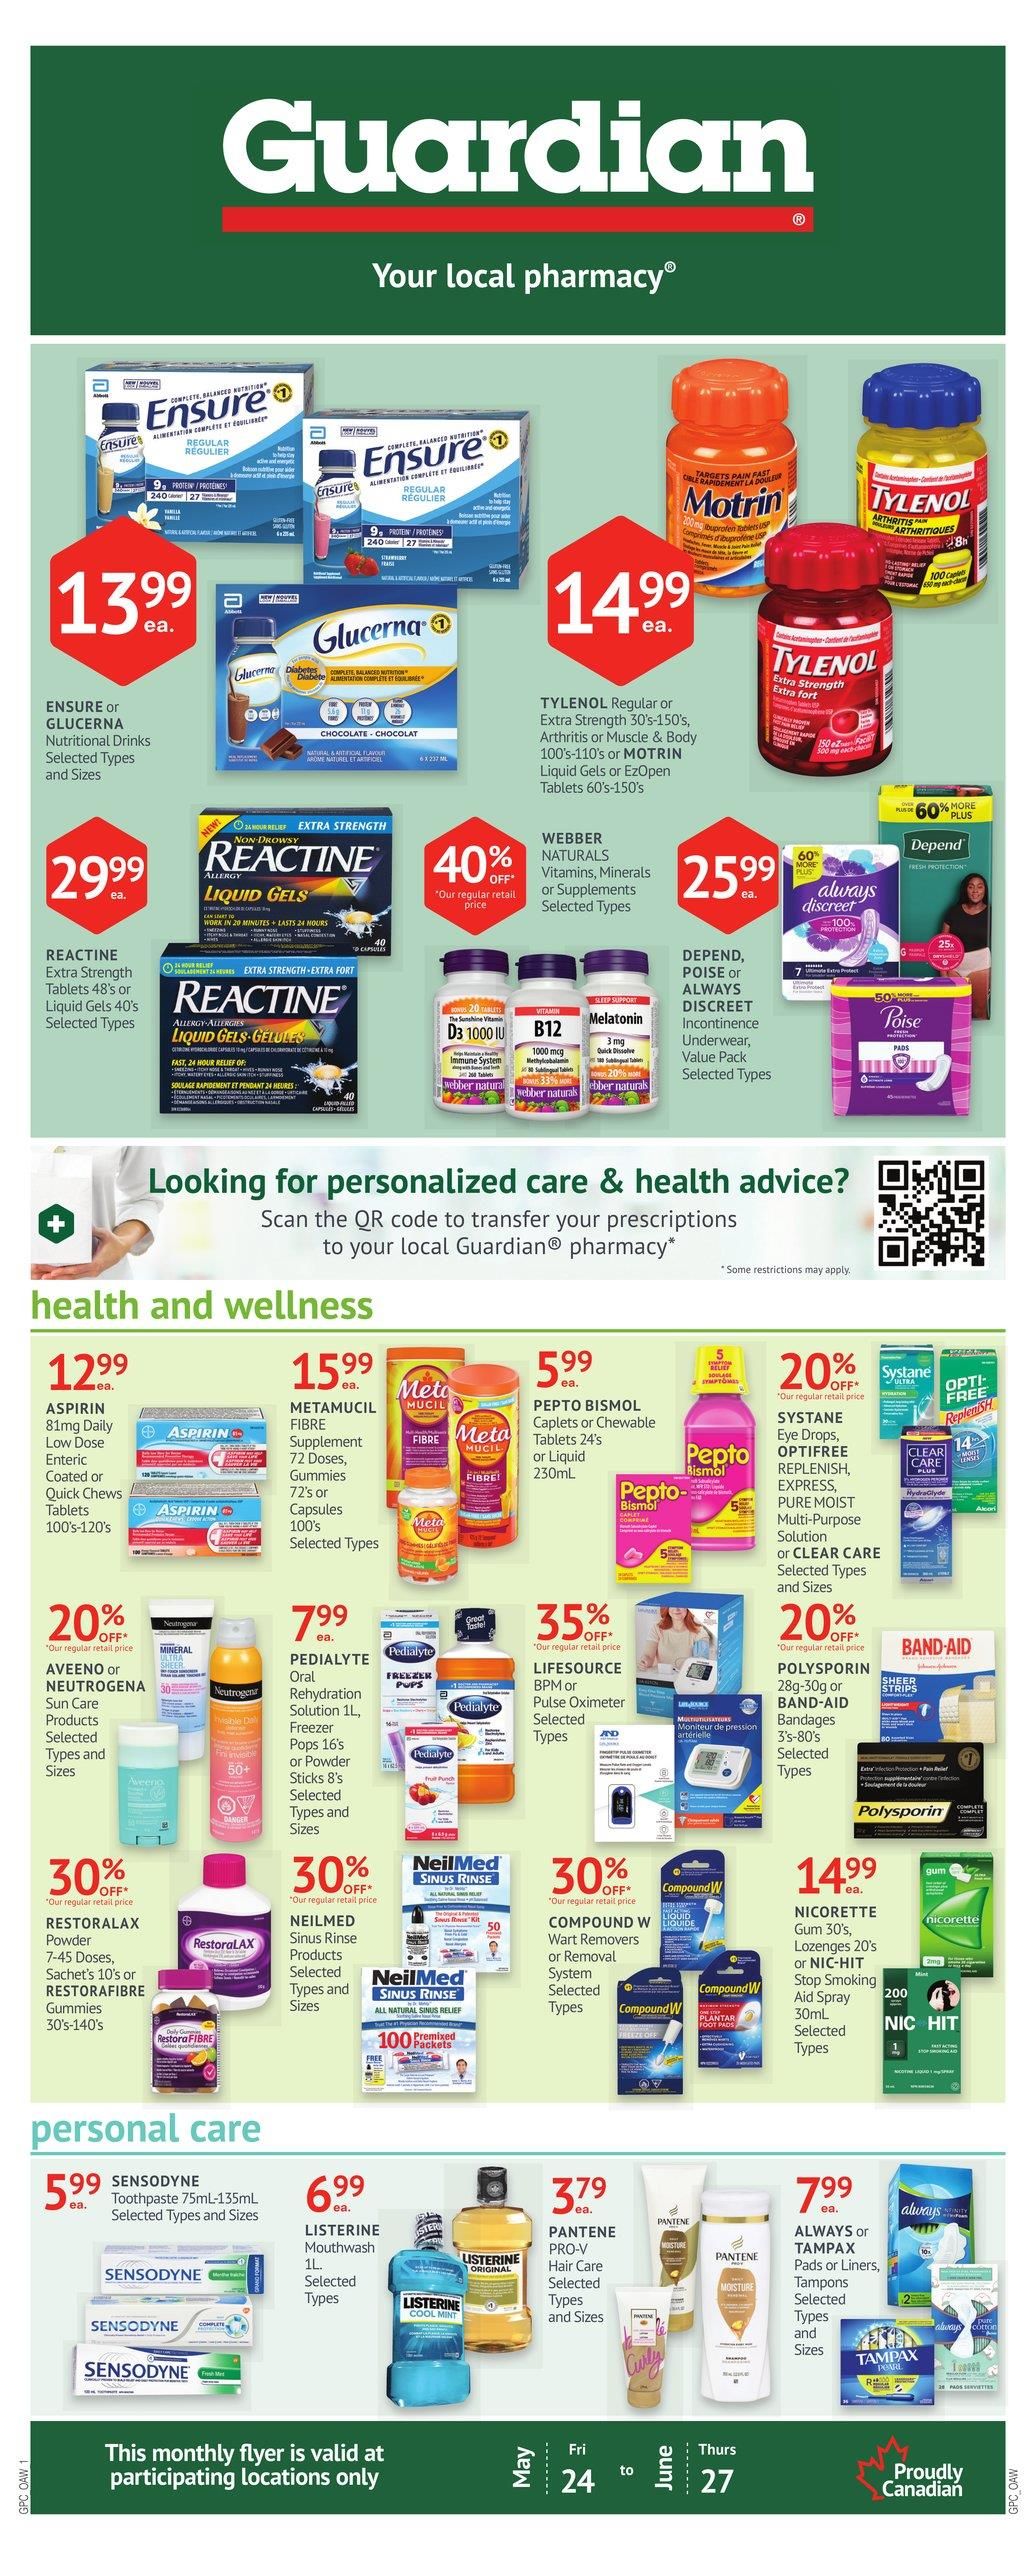 Guardian IDA Pharmacies - Monthly Savings - Page 1